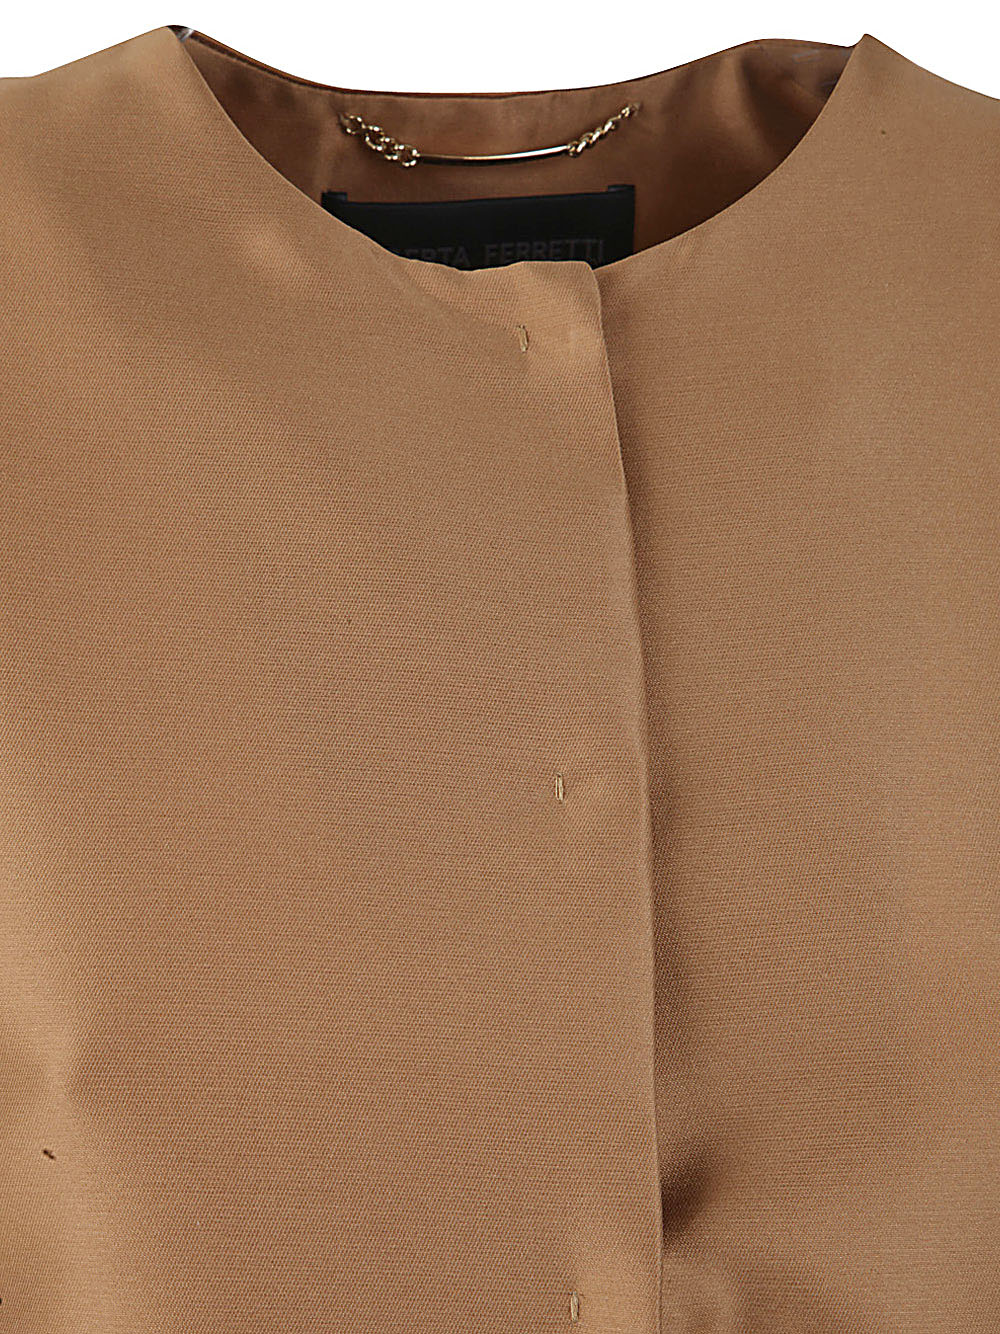 Mikado Jacket